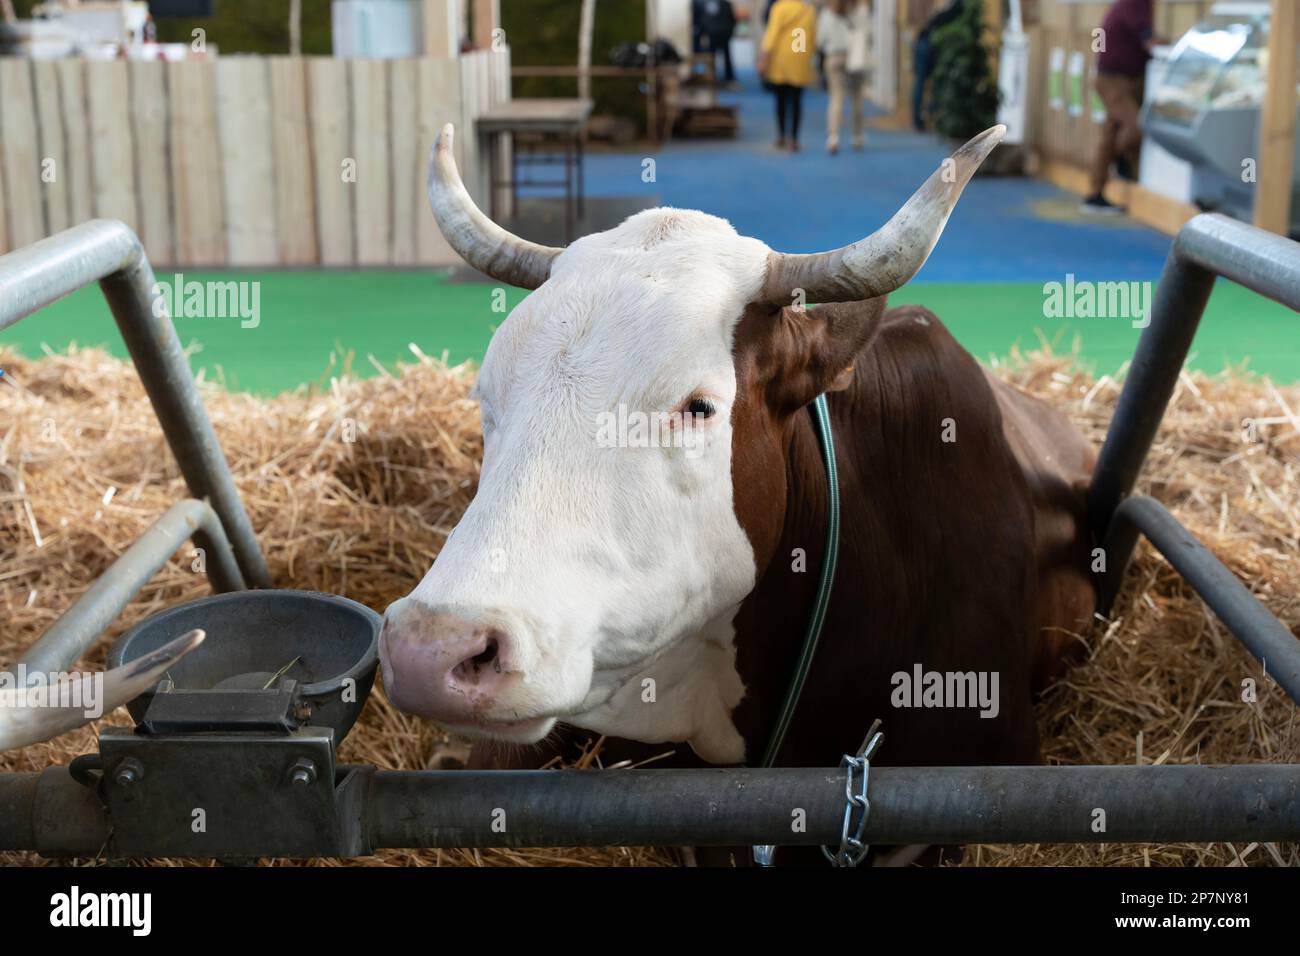 Paris, France - 03 01 2023: International Agricultural Show. An Abondance cow Stock Photo